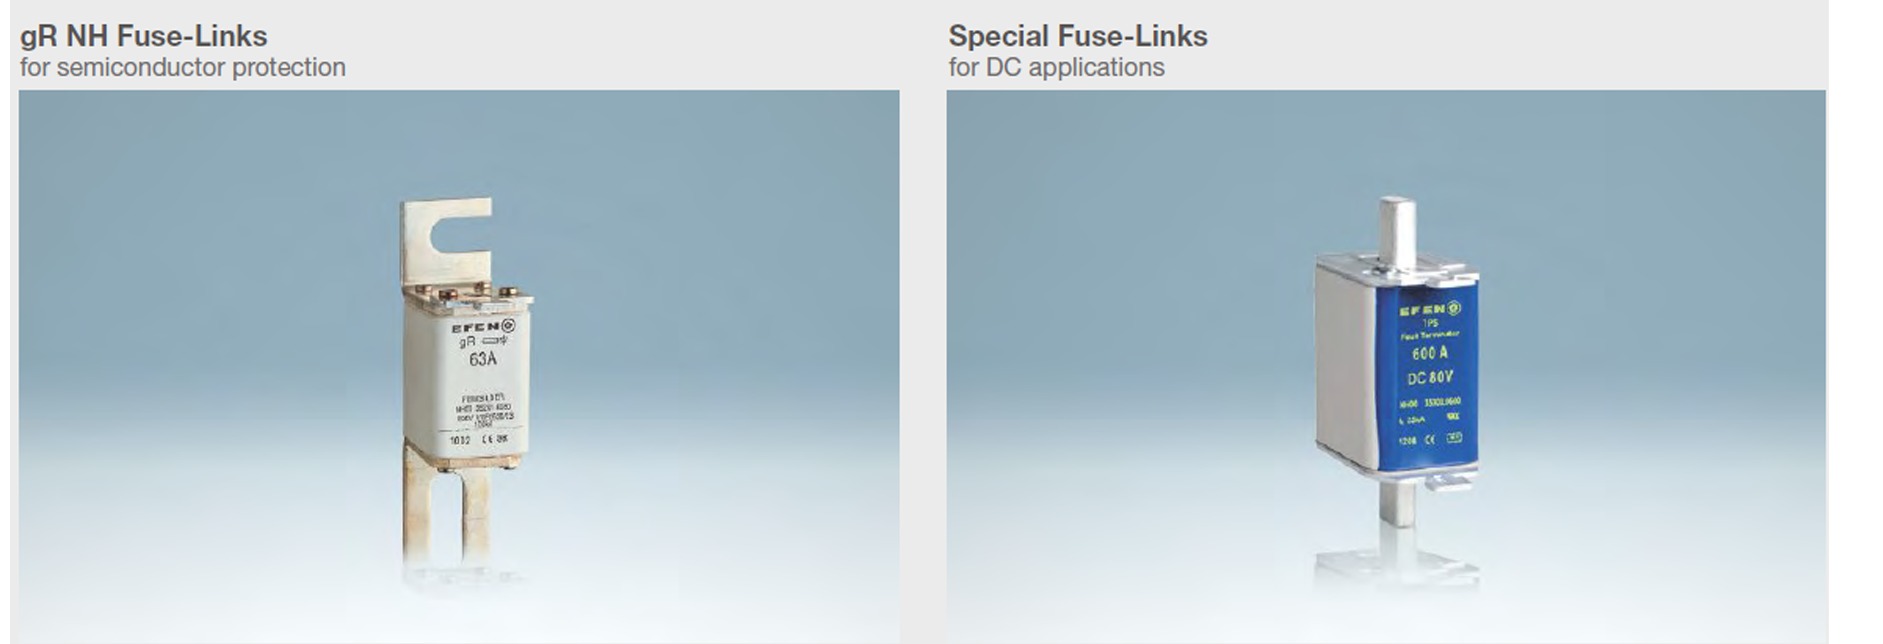 Special Fuse Link